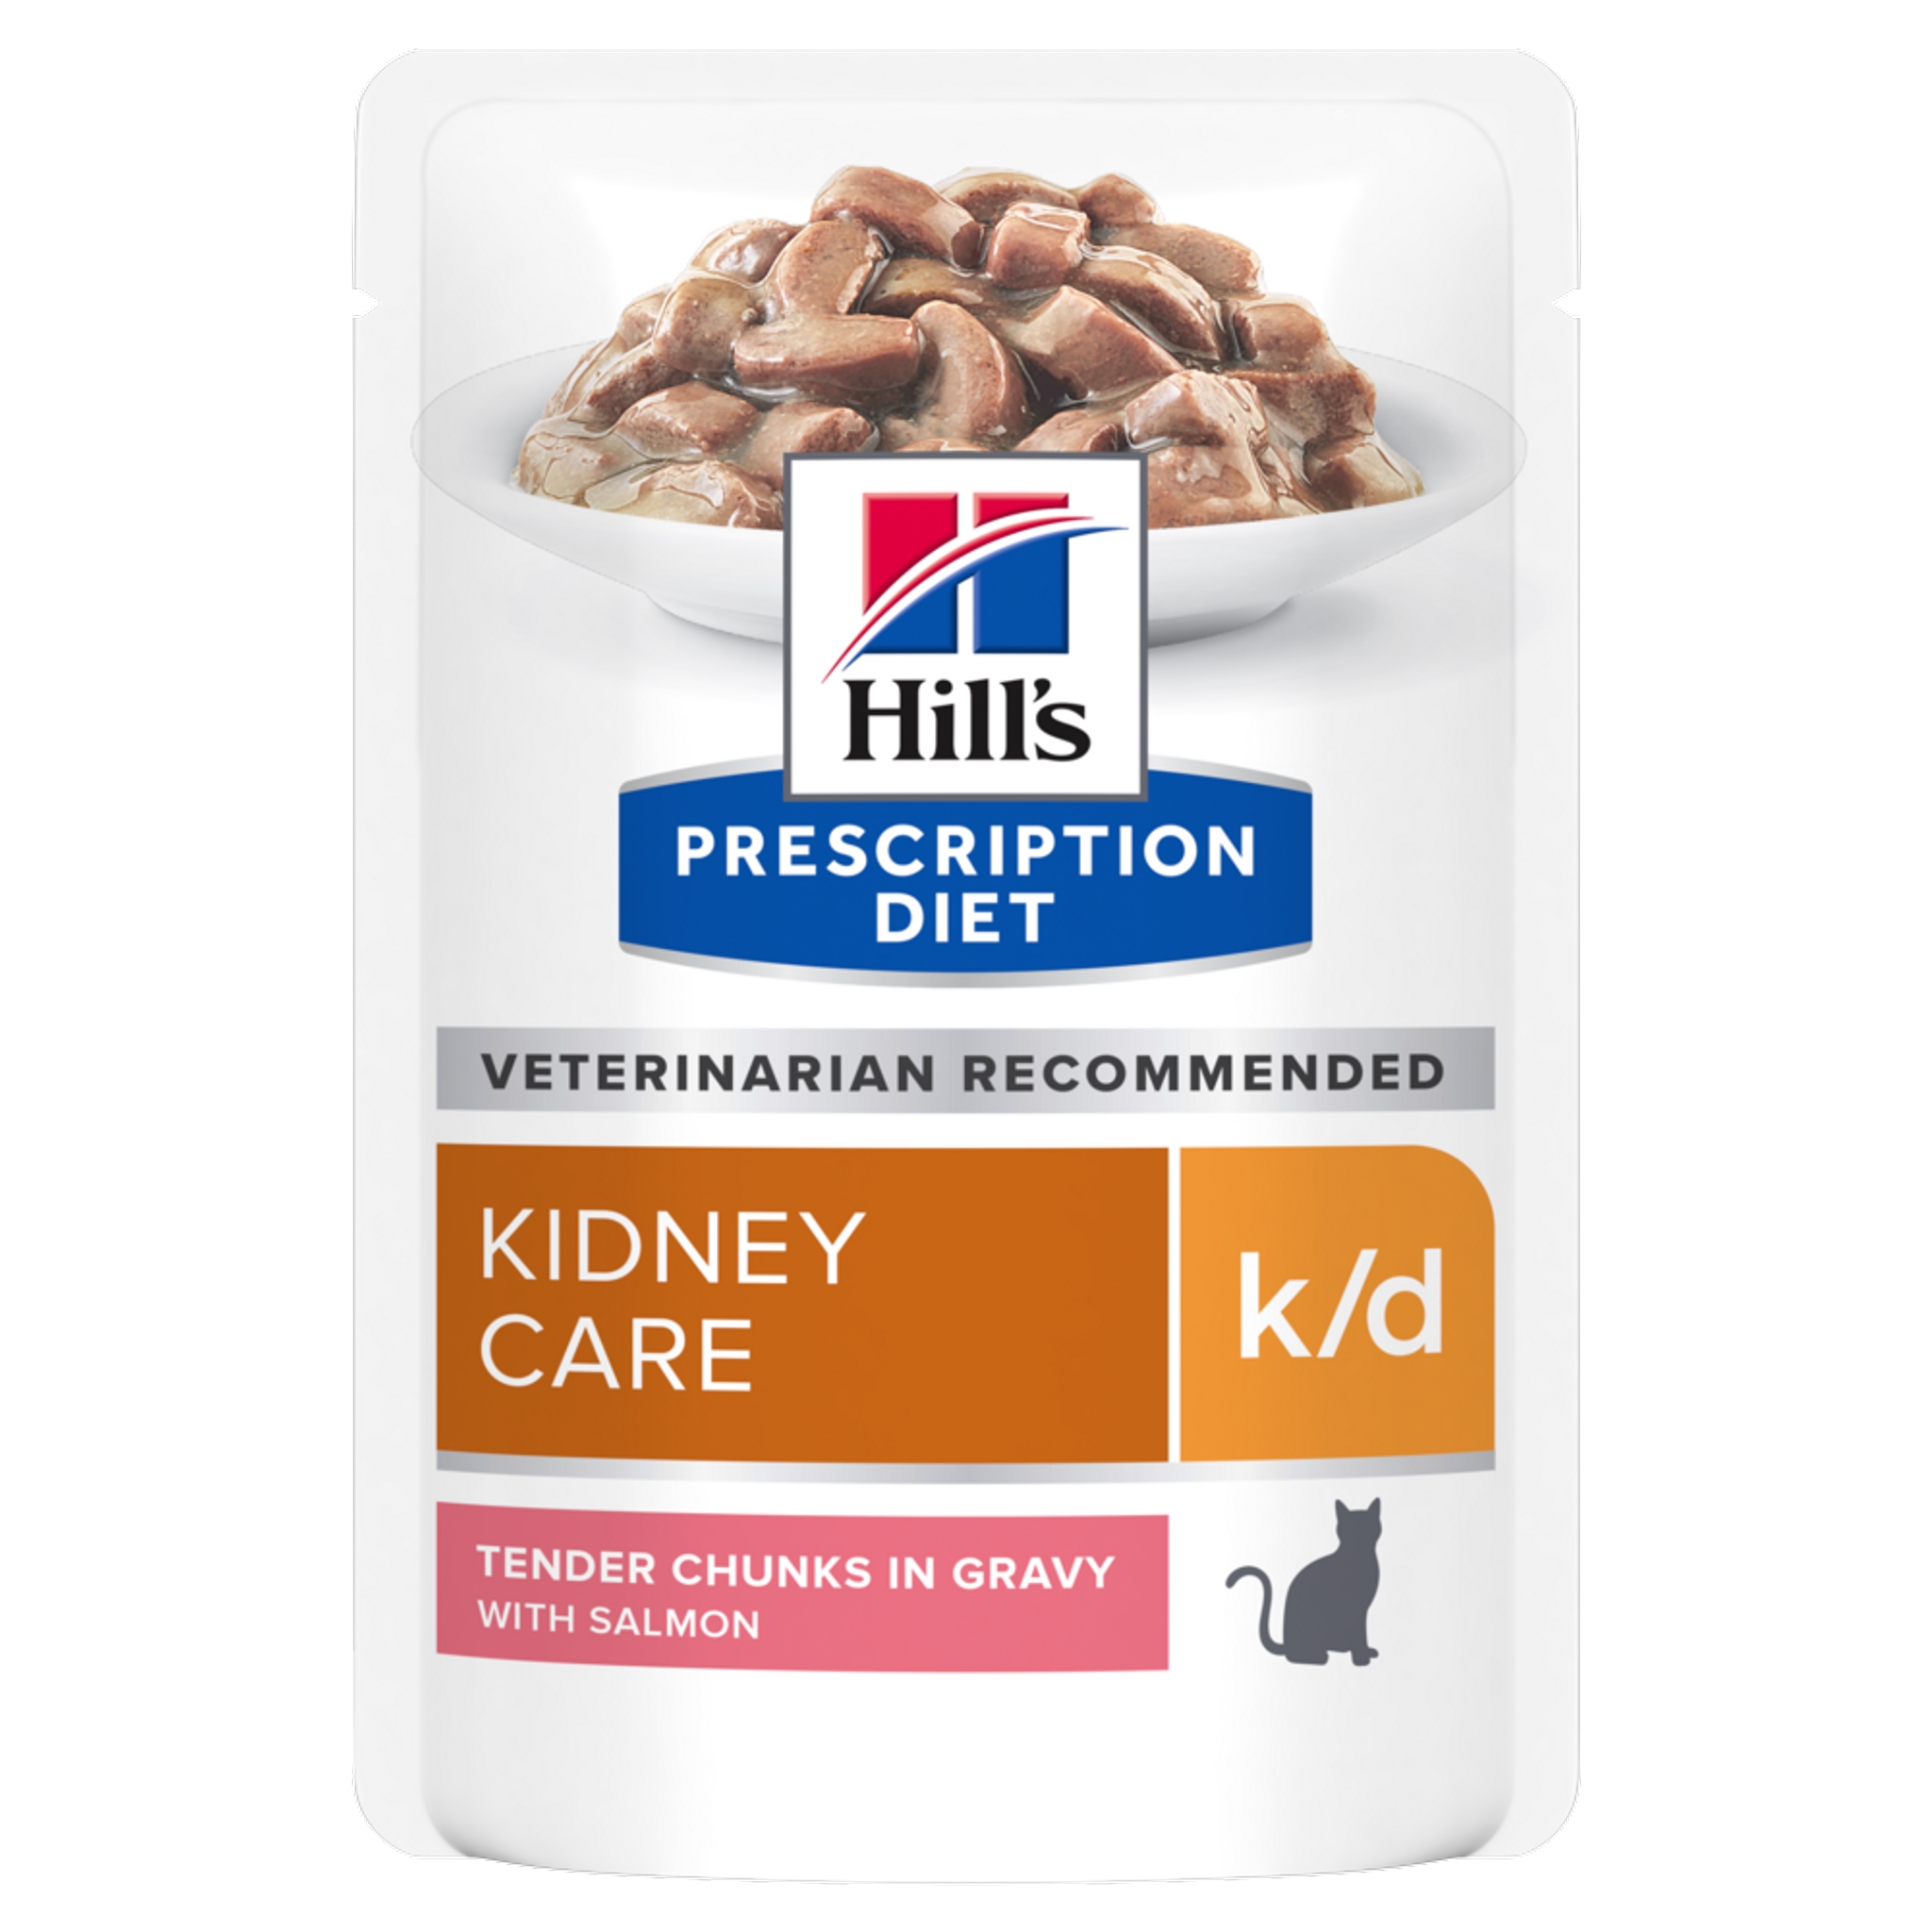 פאוצ' מזון k/d | Hill's Prescription Diet לחתול בוגר (עם סלמון), 85 גר' (12 יח')